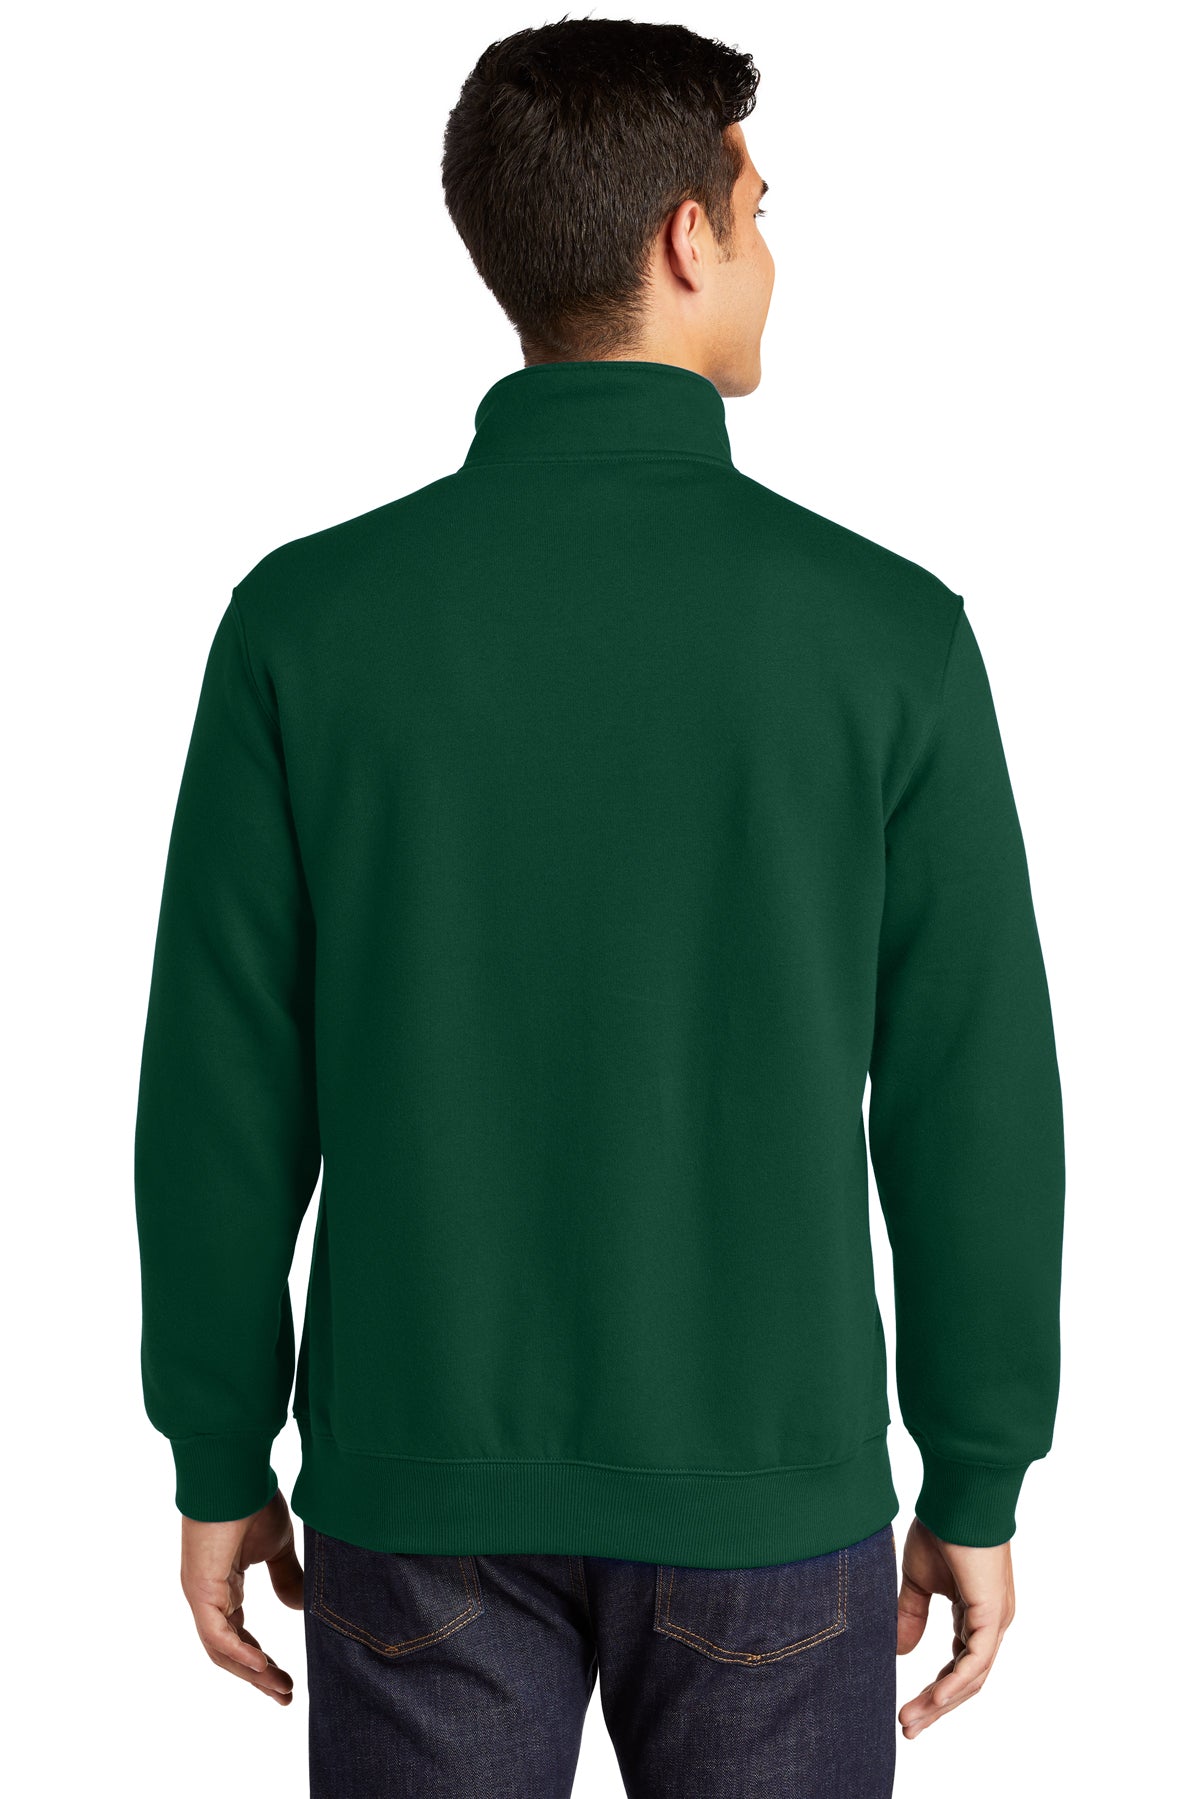 sport-tek_st253 _forest green_company_logo_sweatshirts